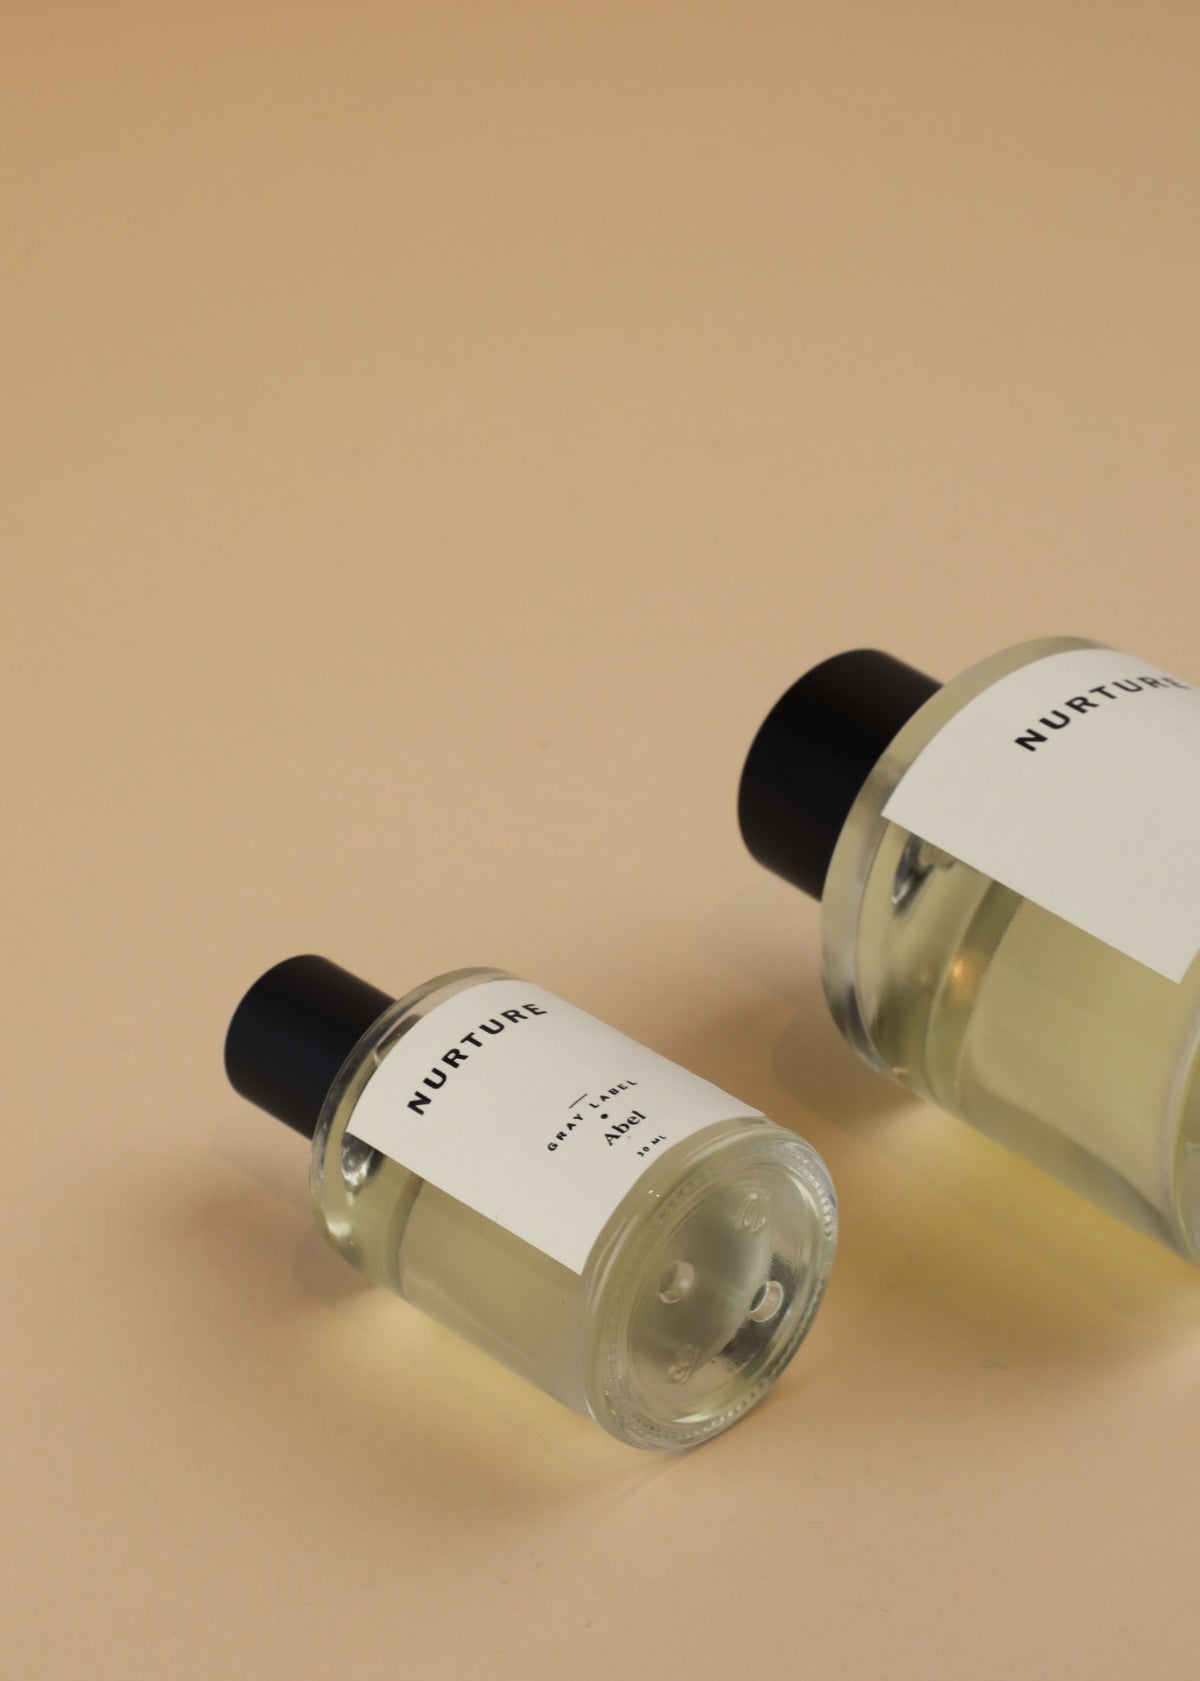 Two bottles of NURTURE - grey label sandalwood perfume on a beige surface. Brand: Abel.